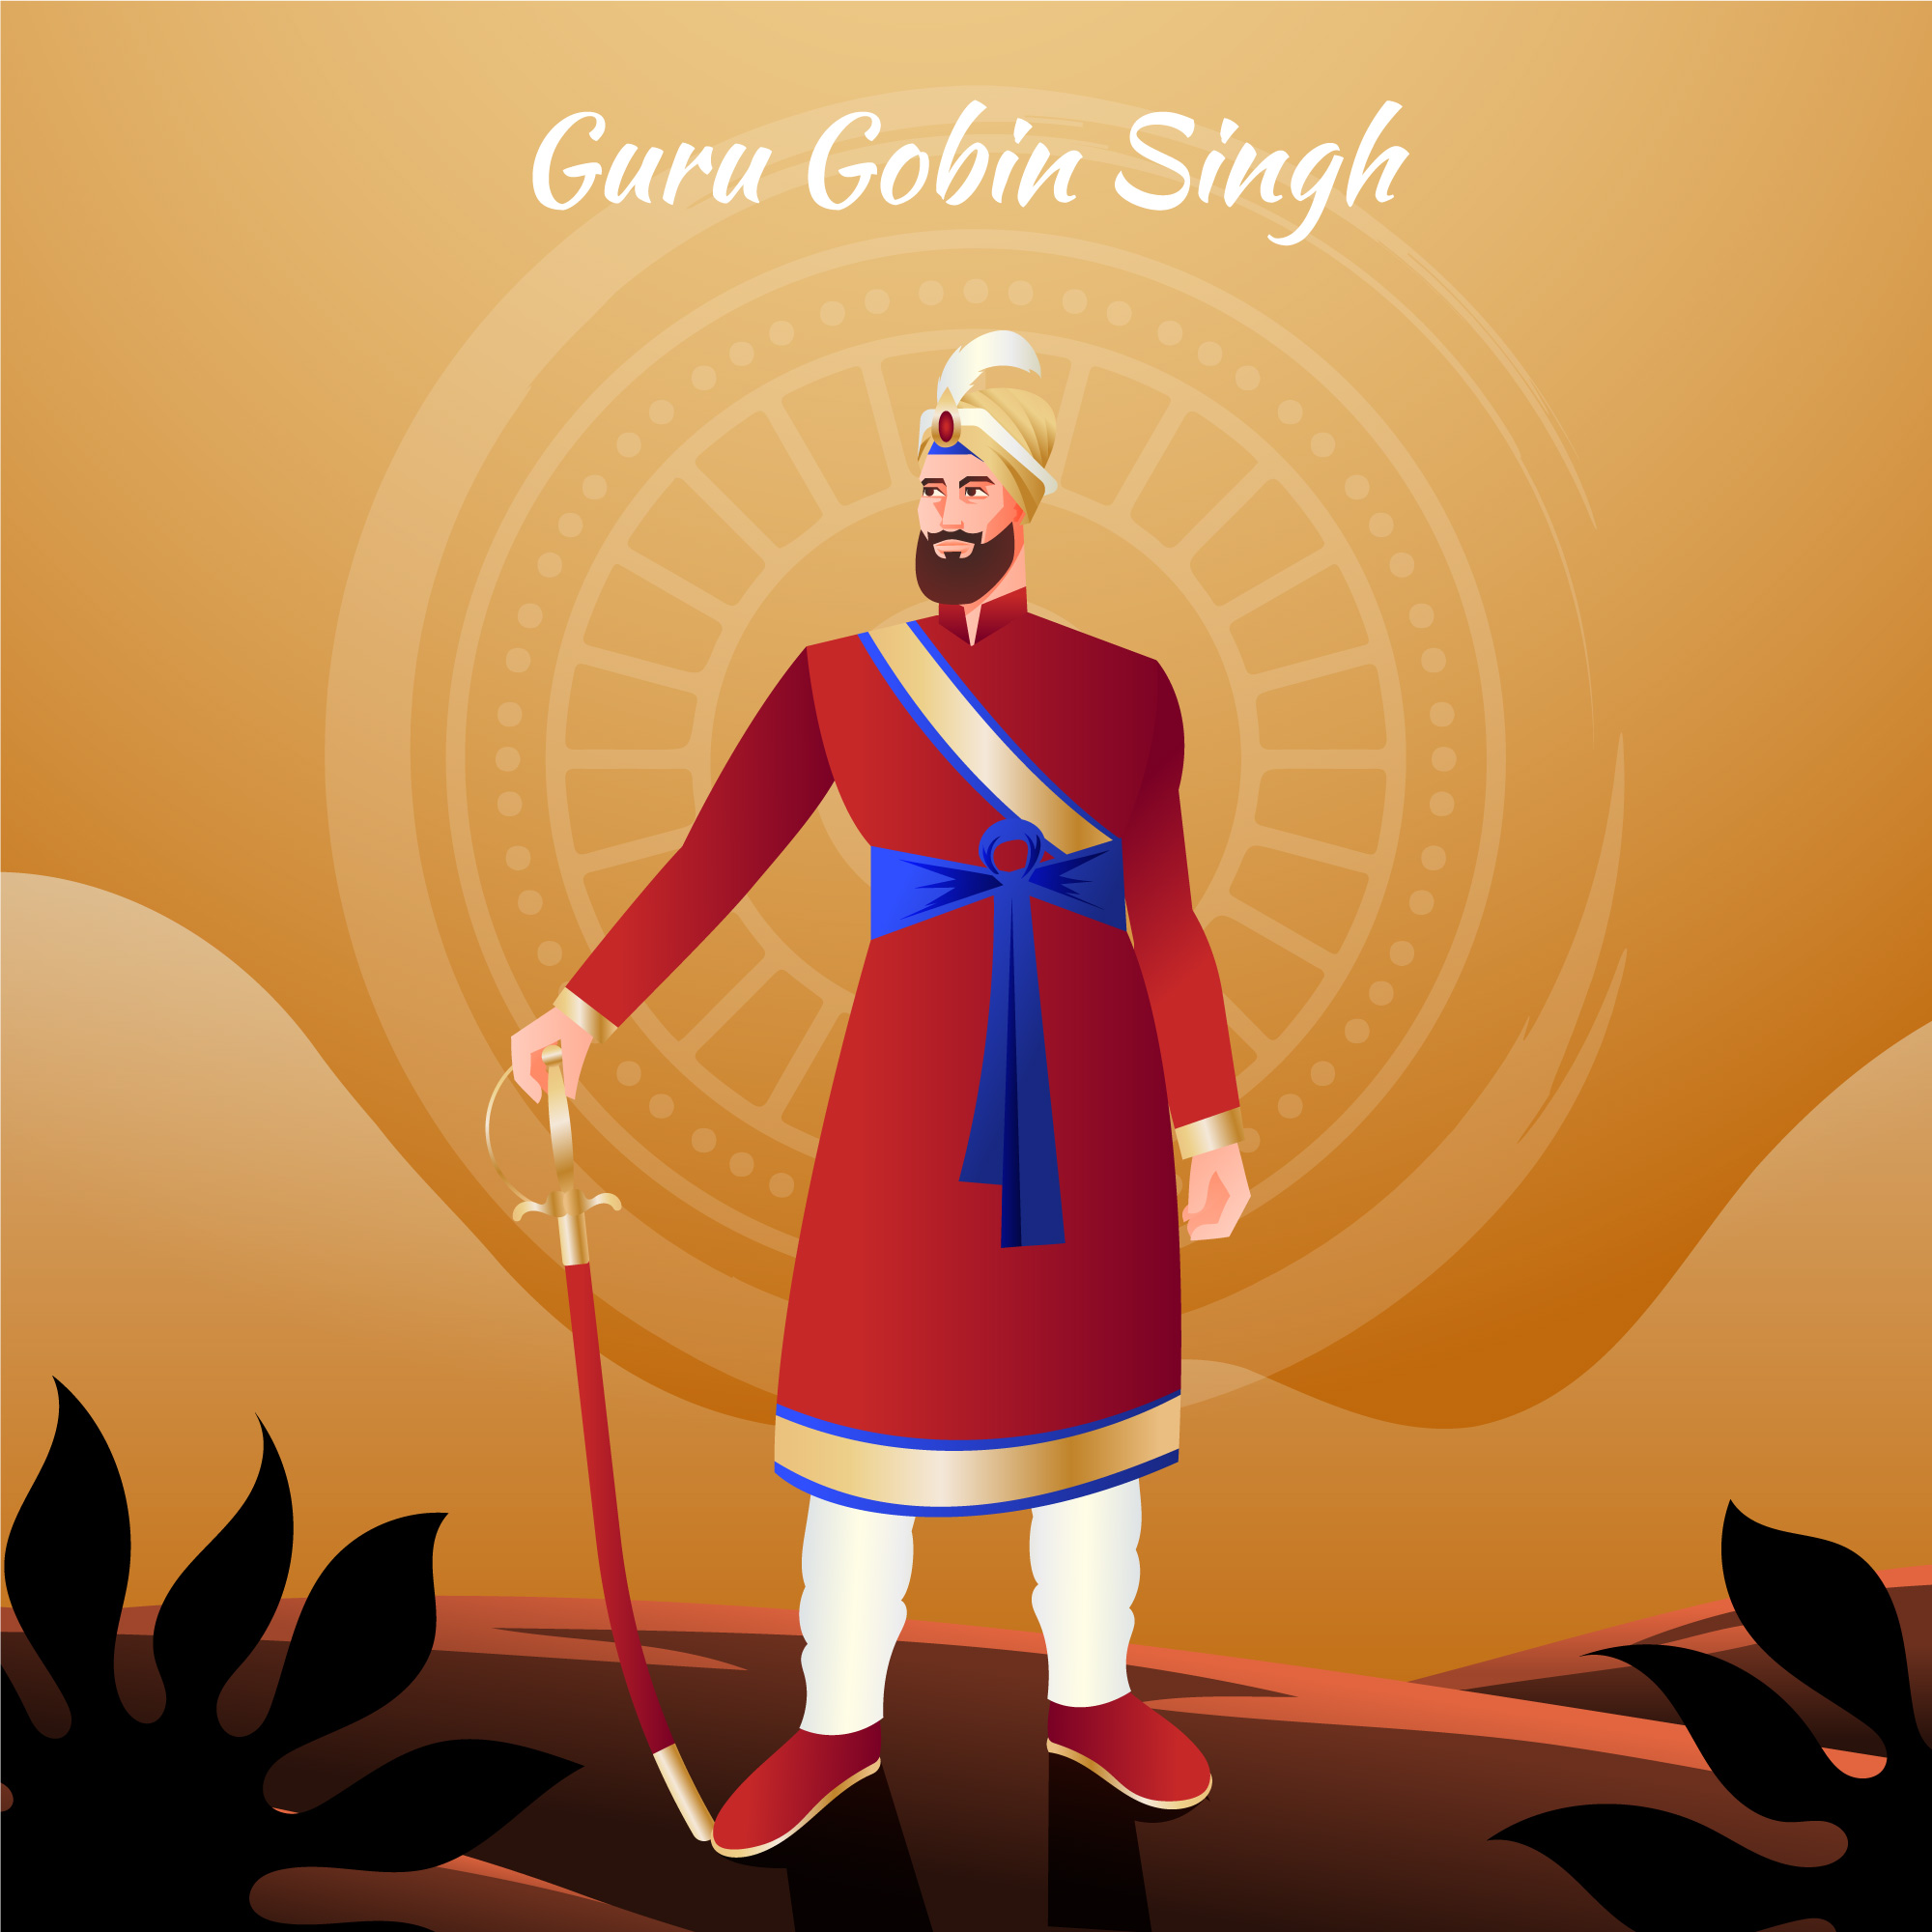 Guru Gobind Singh Prakash Parv 2022 Quotes, Messages, HD Images, Wishes,  Greetings, Slogans, and HD Wallpaper